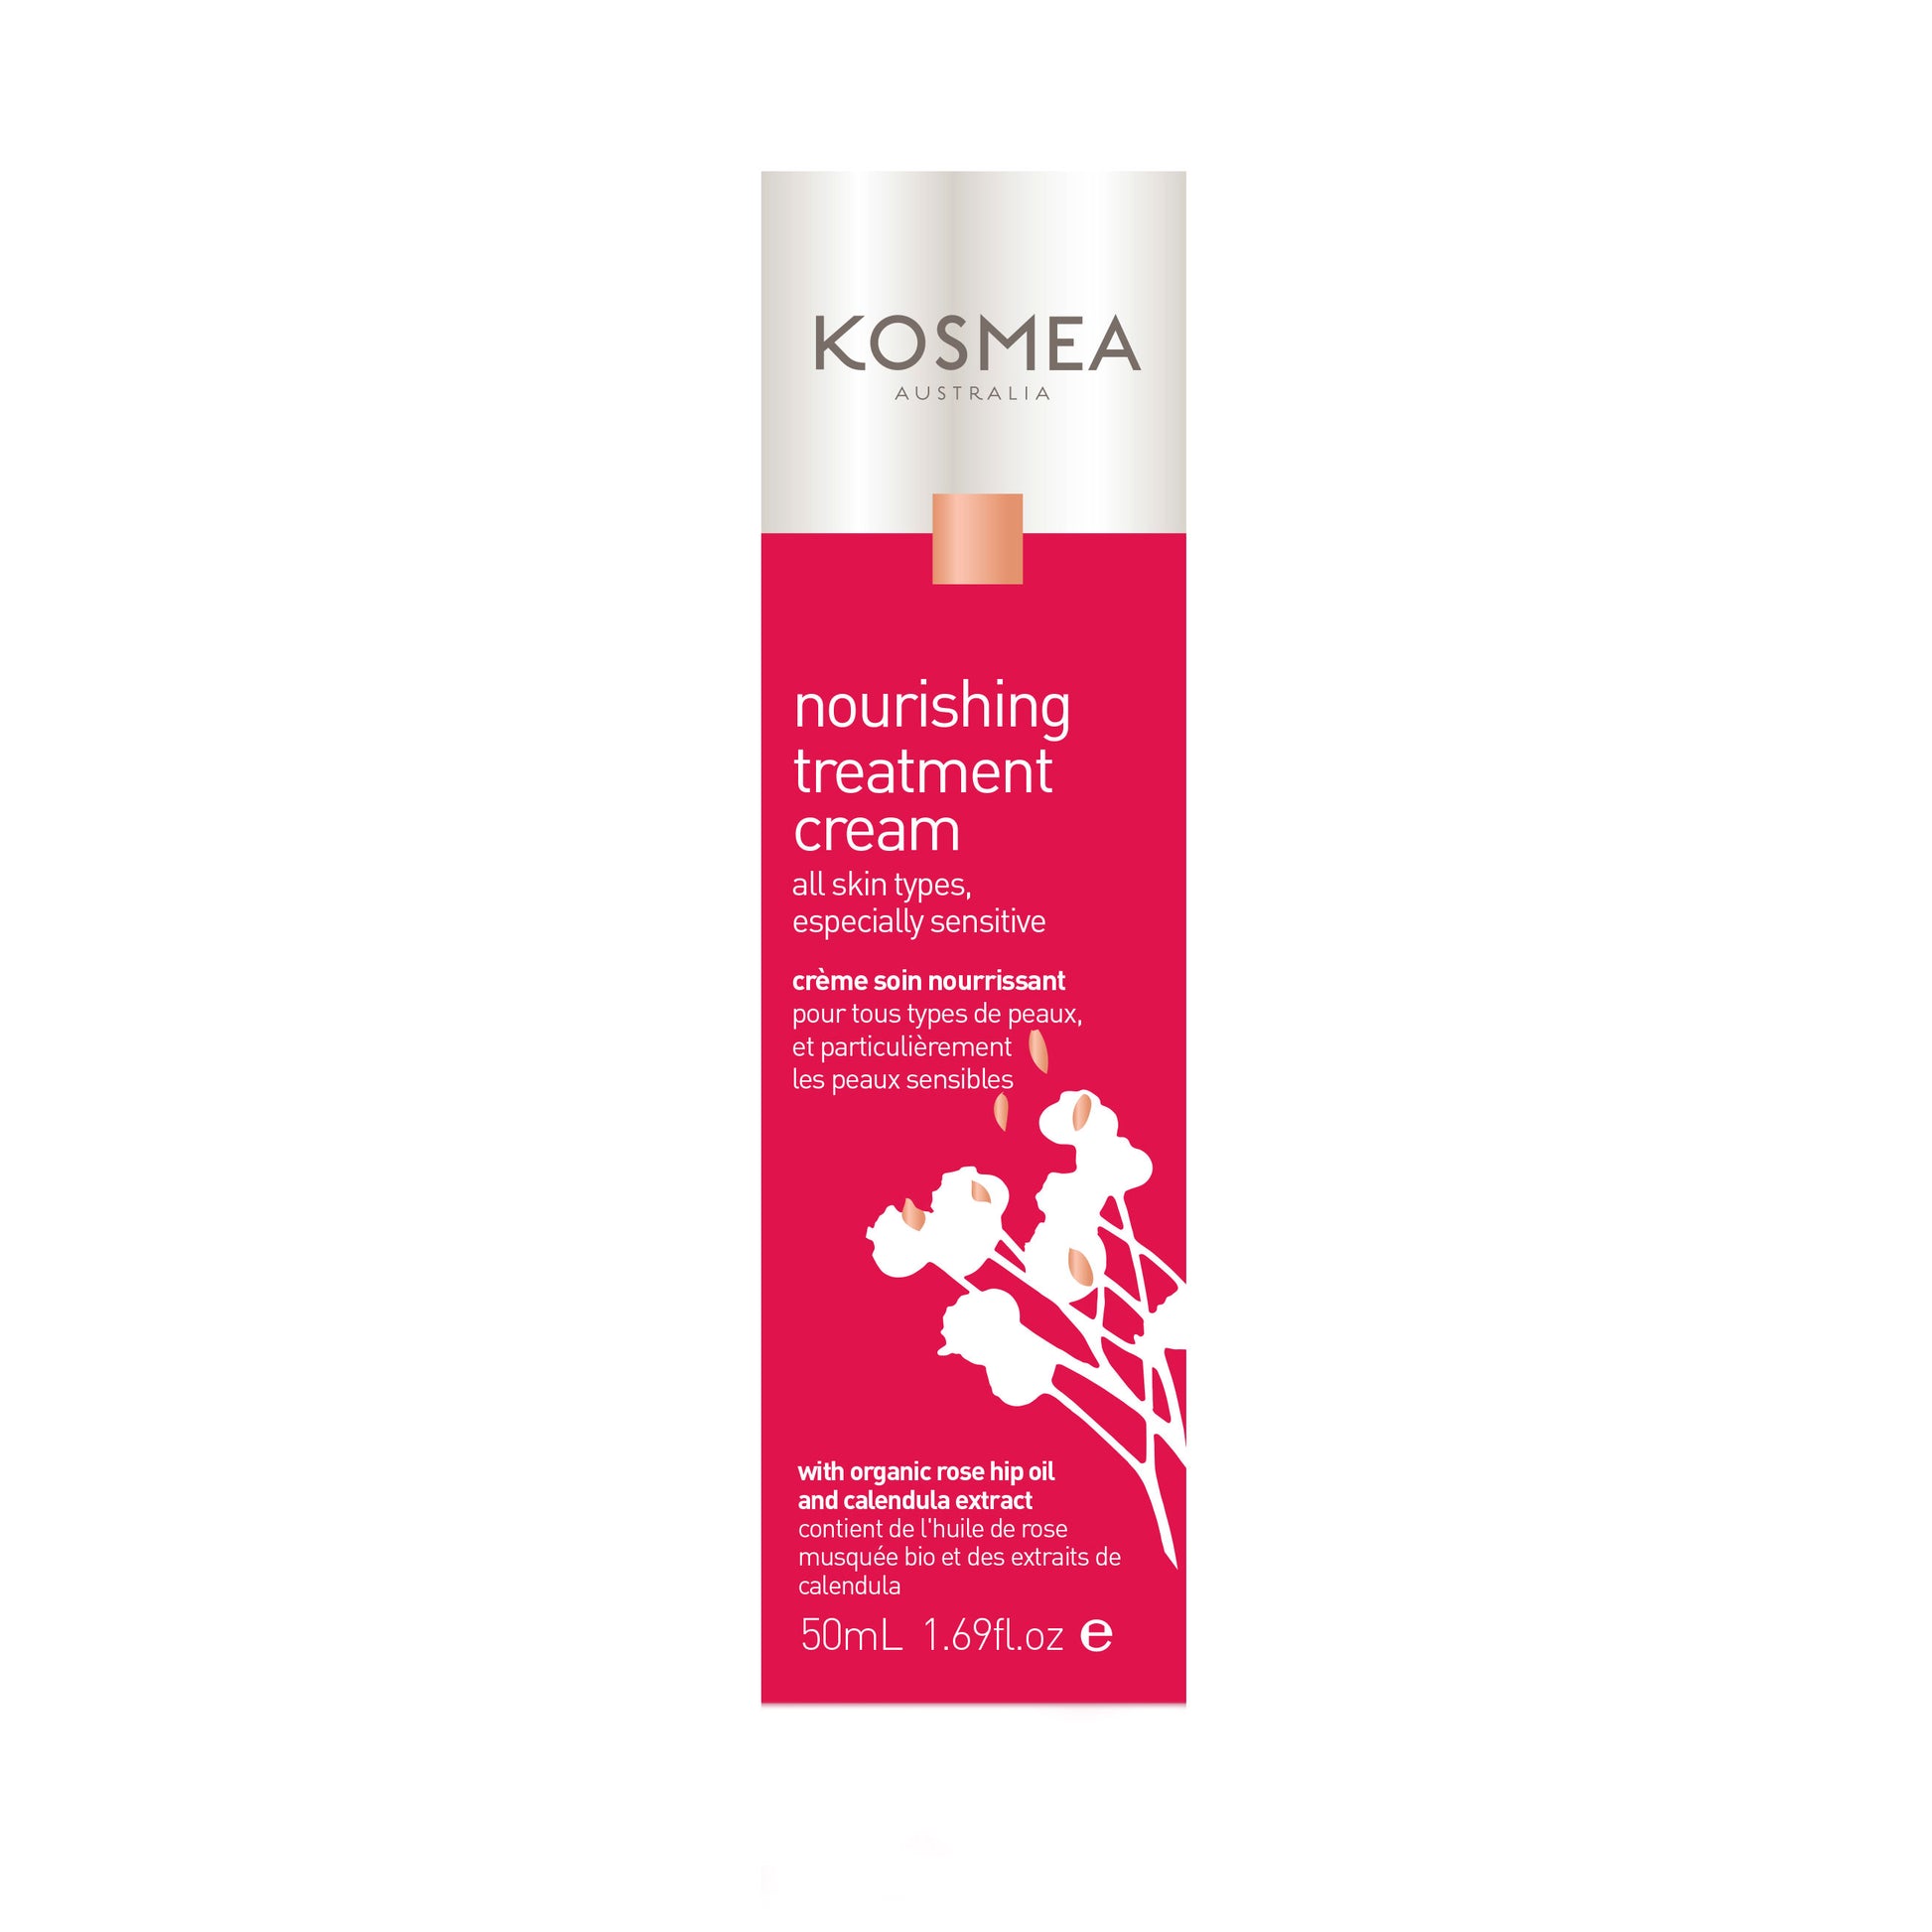 Kosmea Australia Nourishing Moisture Cream 50ml Packaging